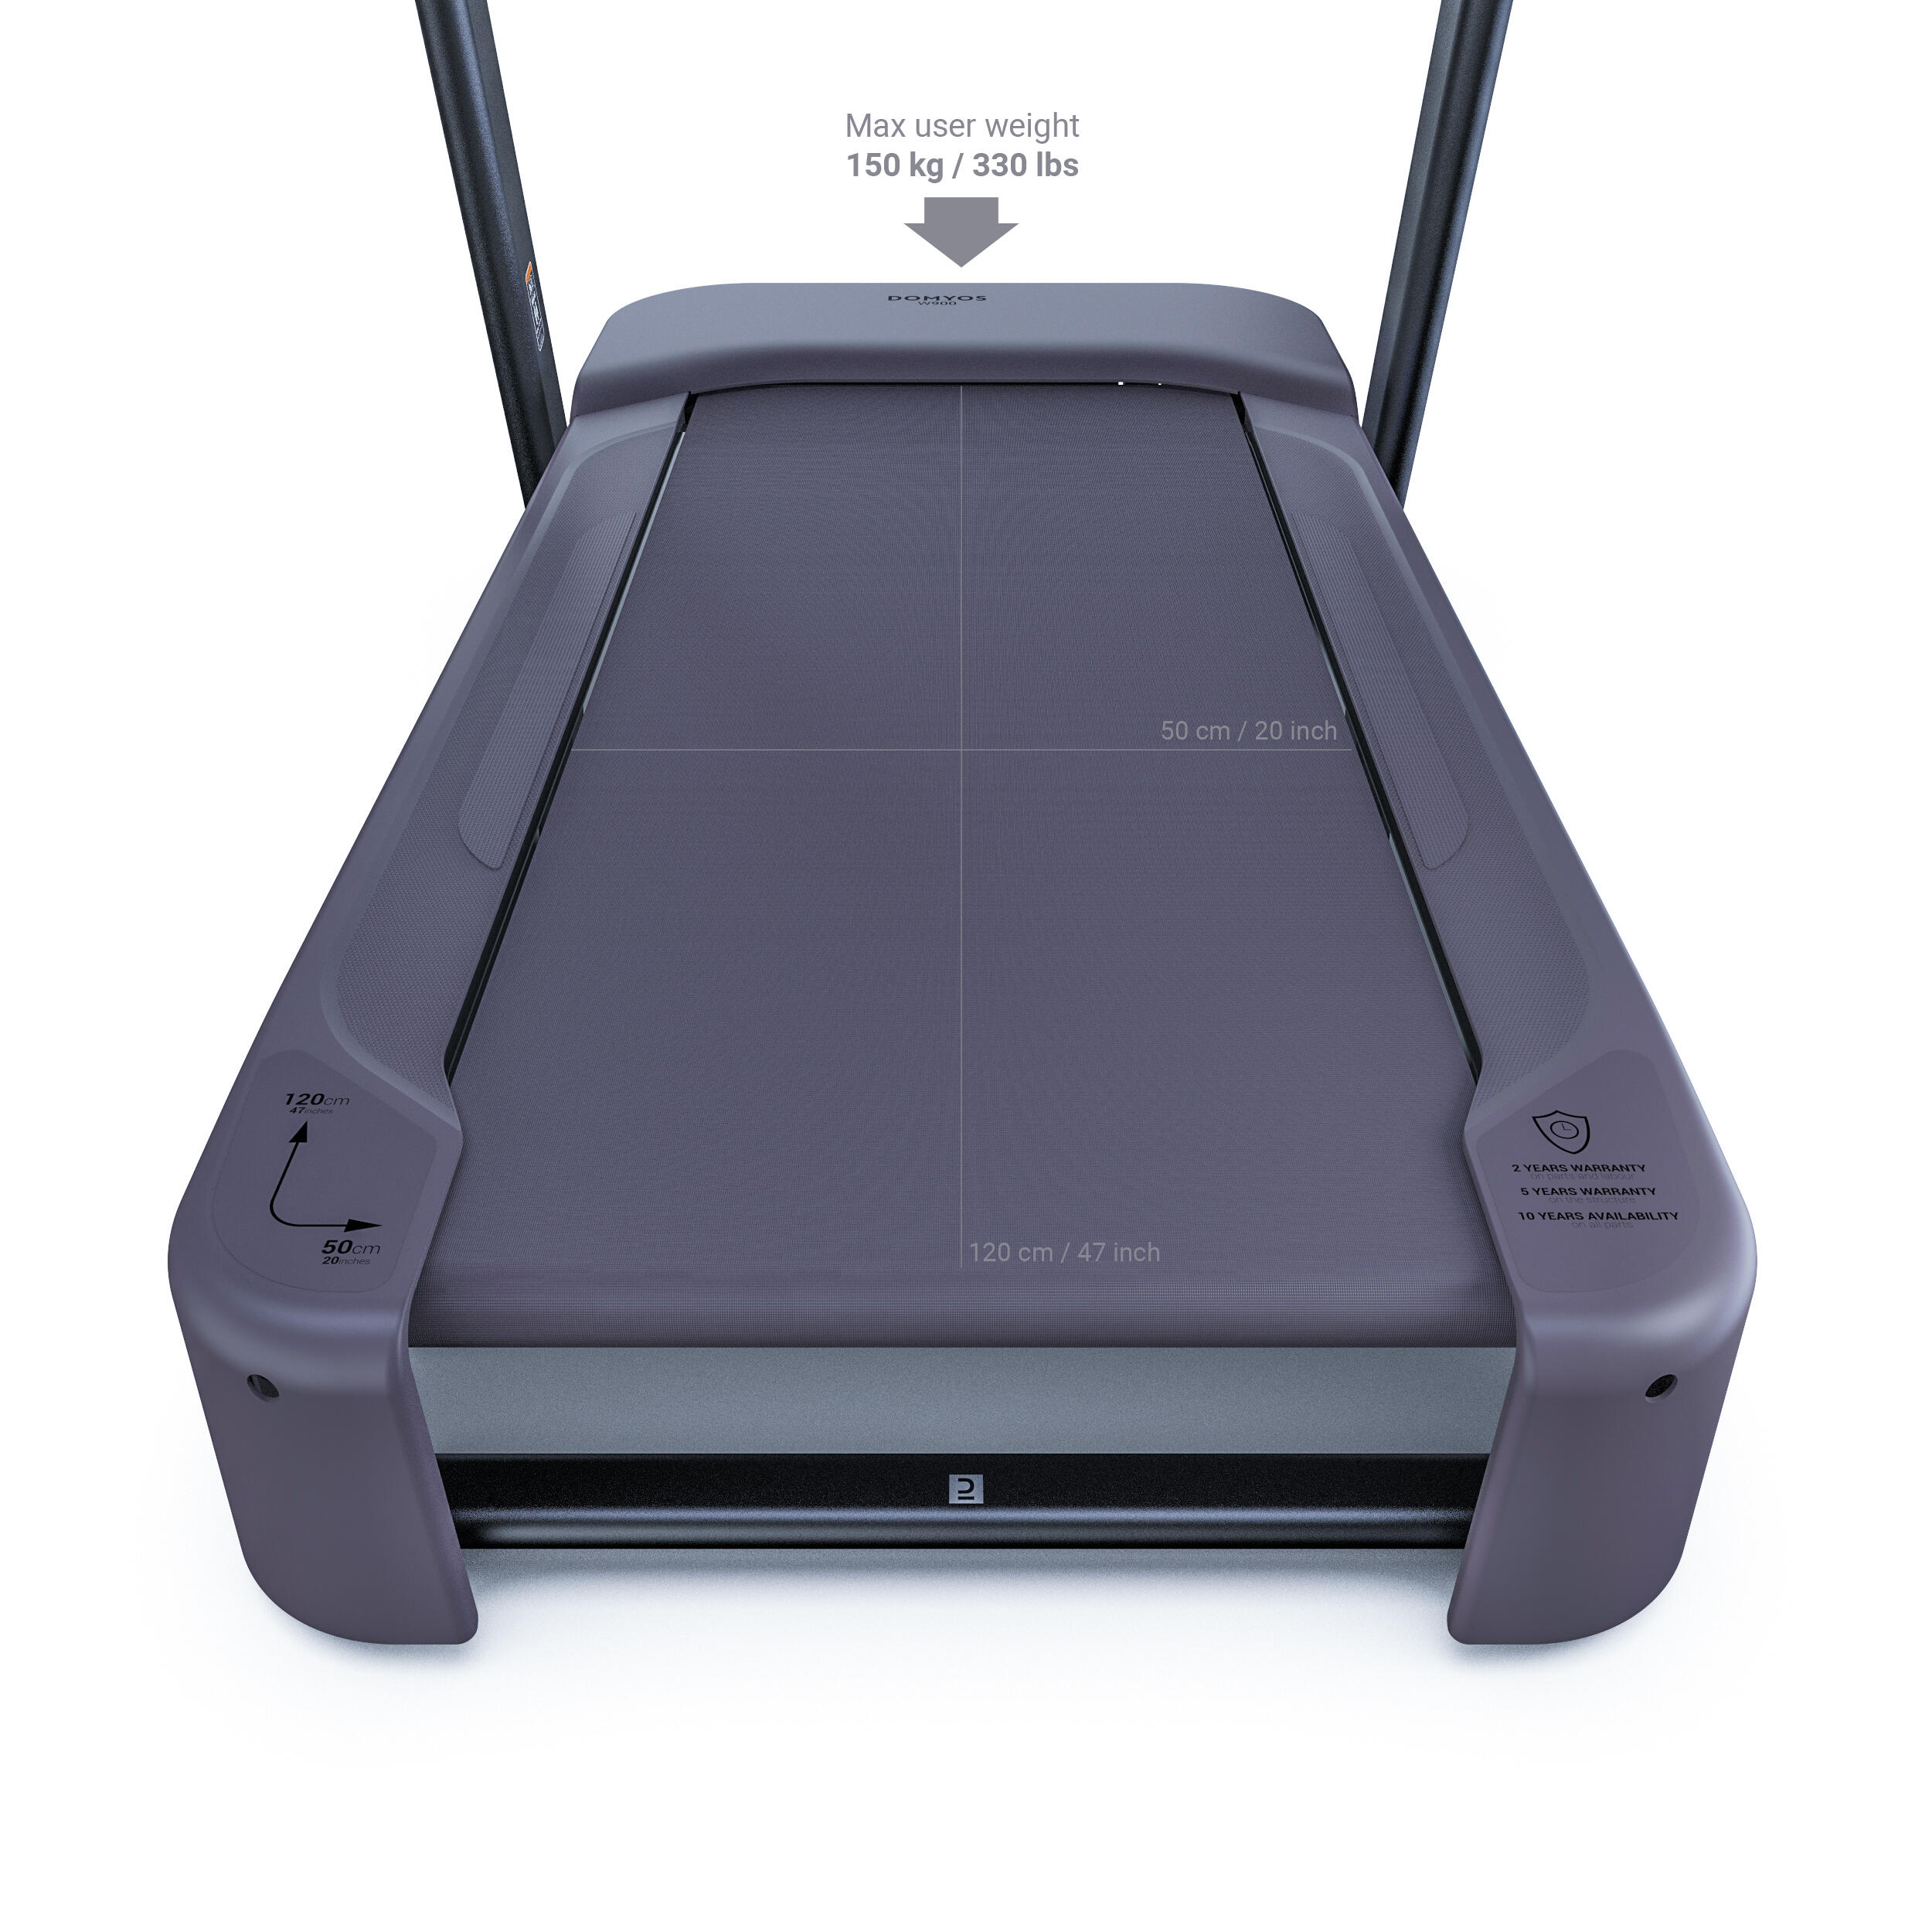 Extra-Comfortable Smart Treadmill W900 - 10 km/h, 50⨯120 cm 5/6